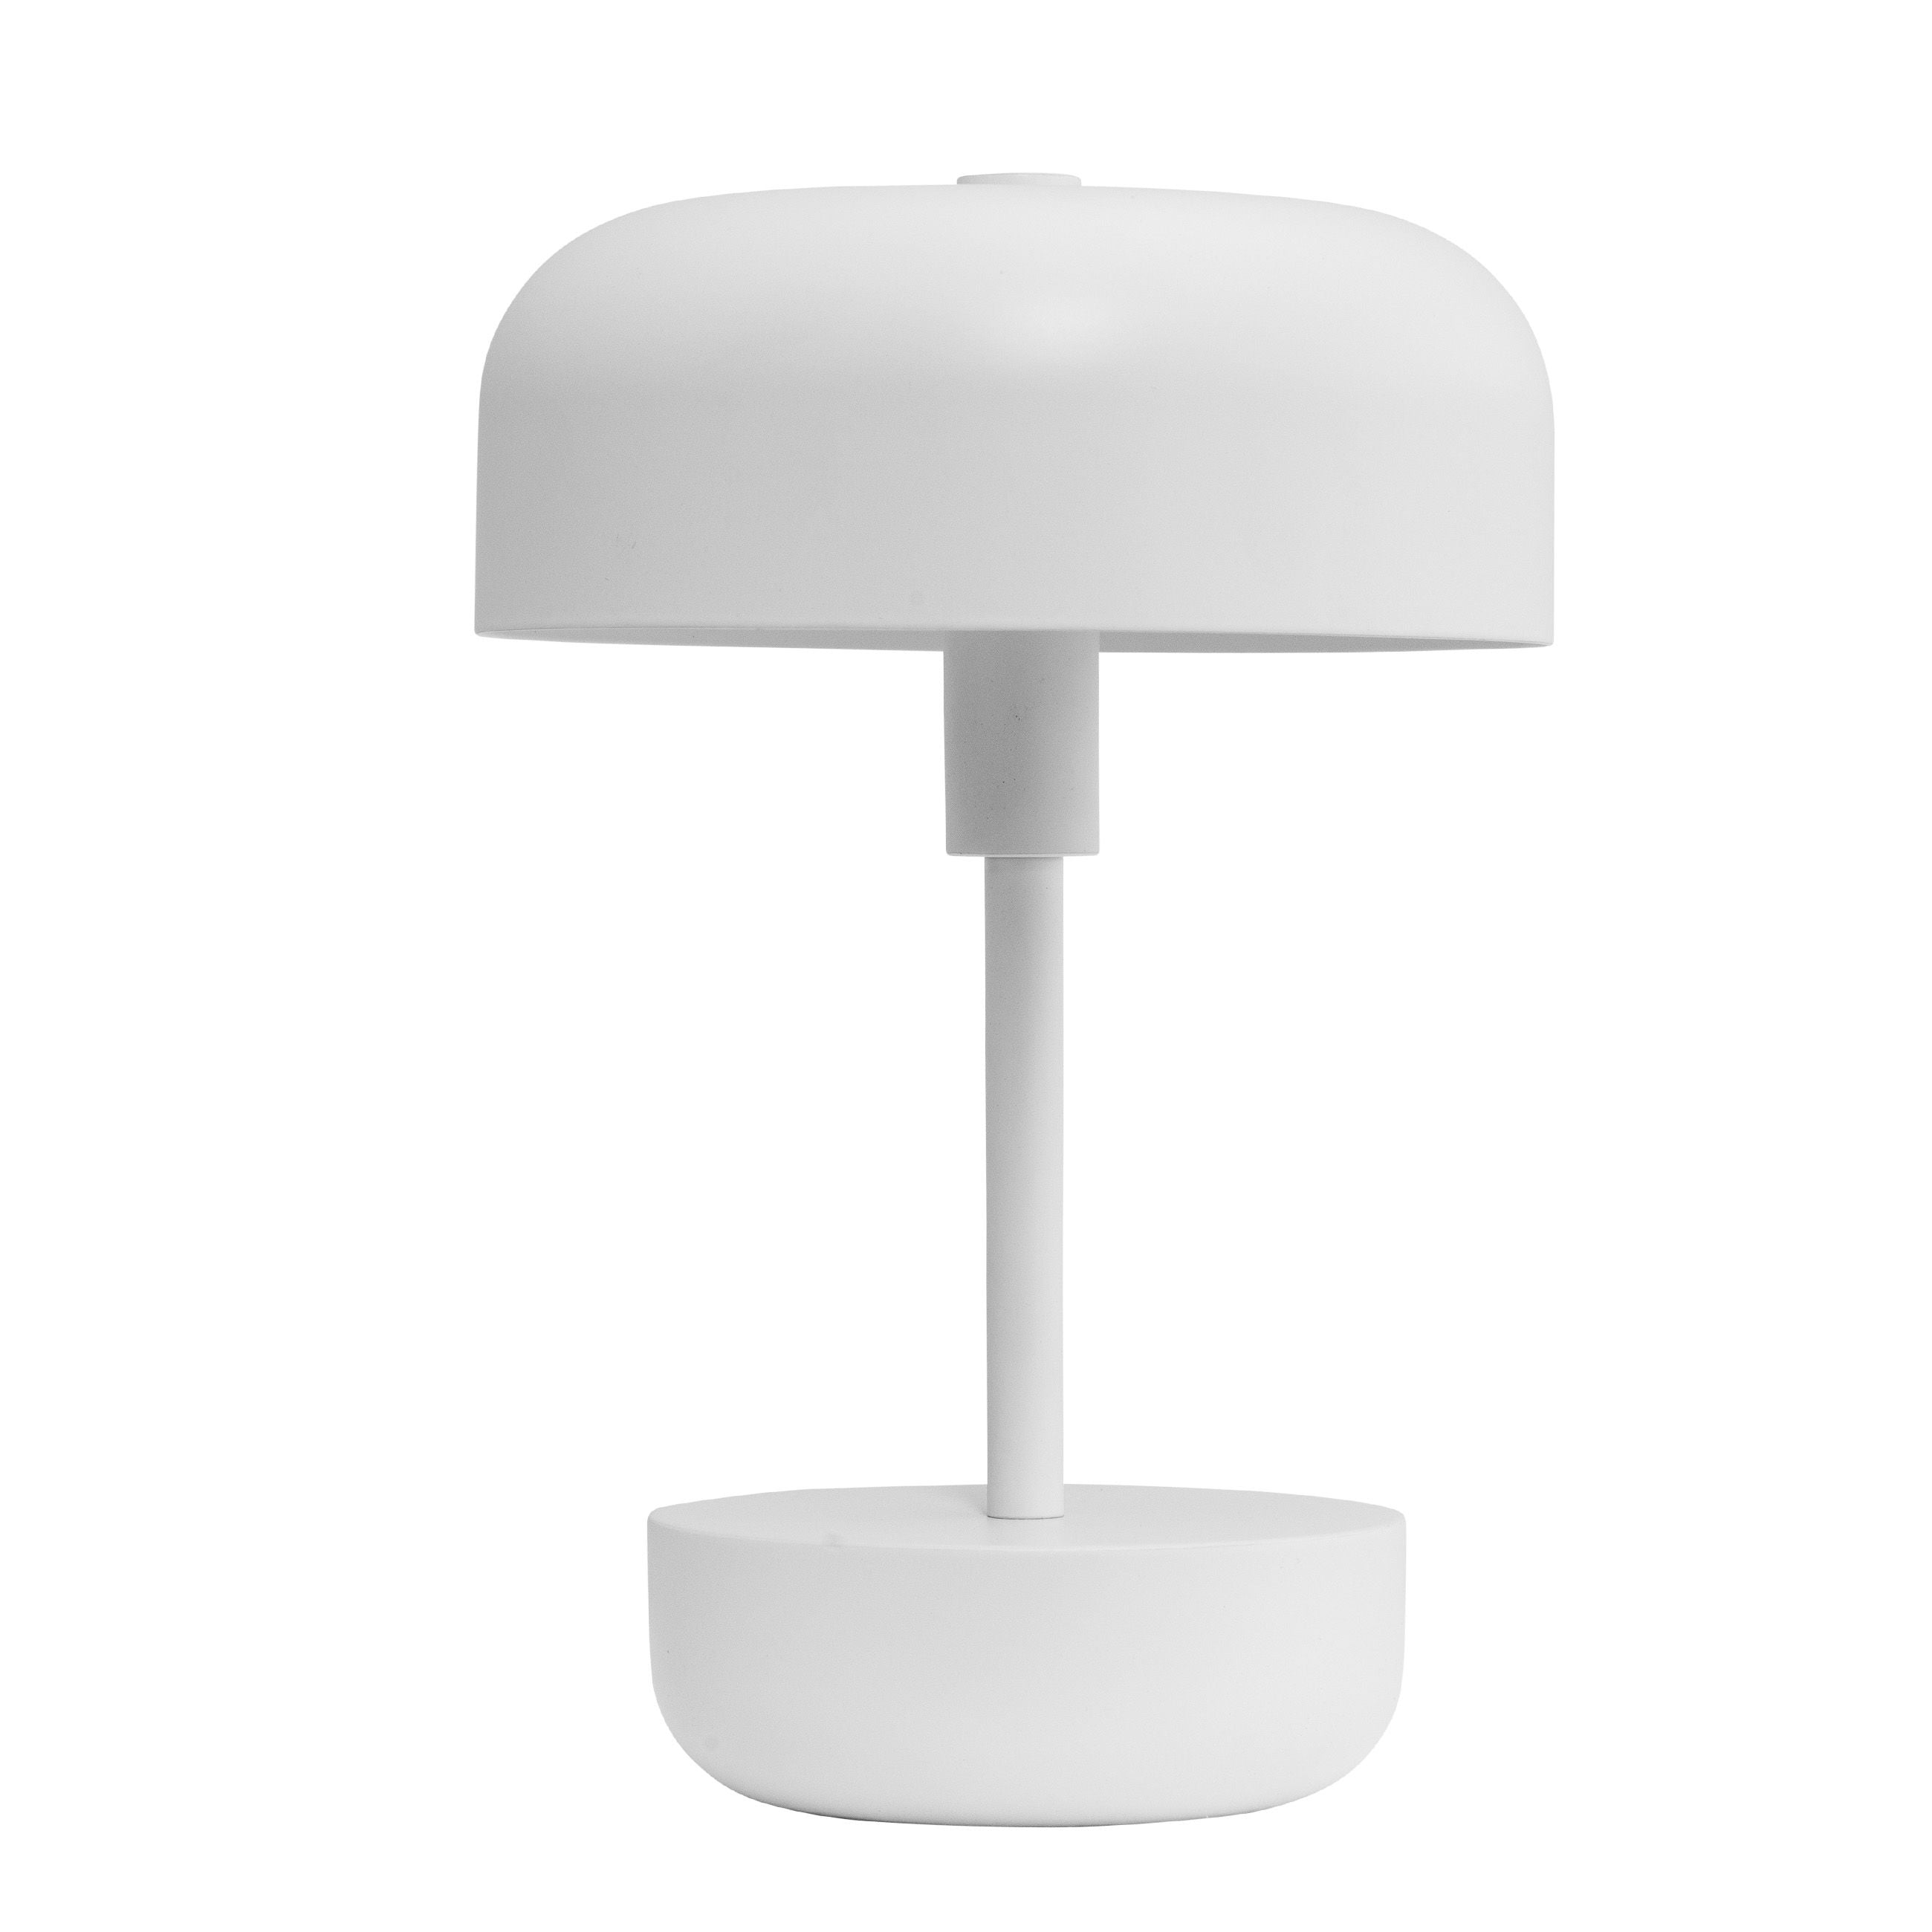 Dyberg Larsen haipot lampe de table rechargeable, blanc